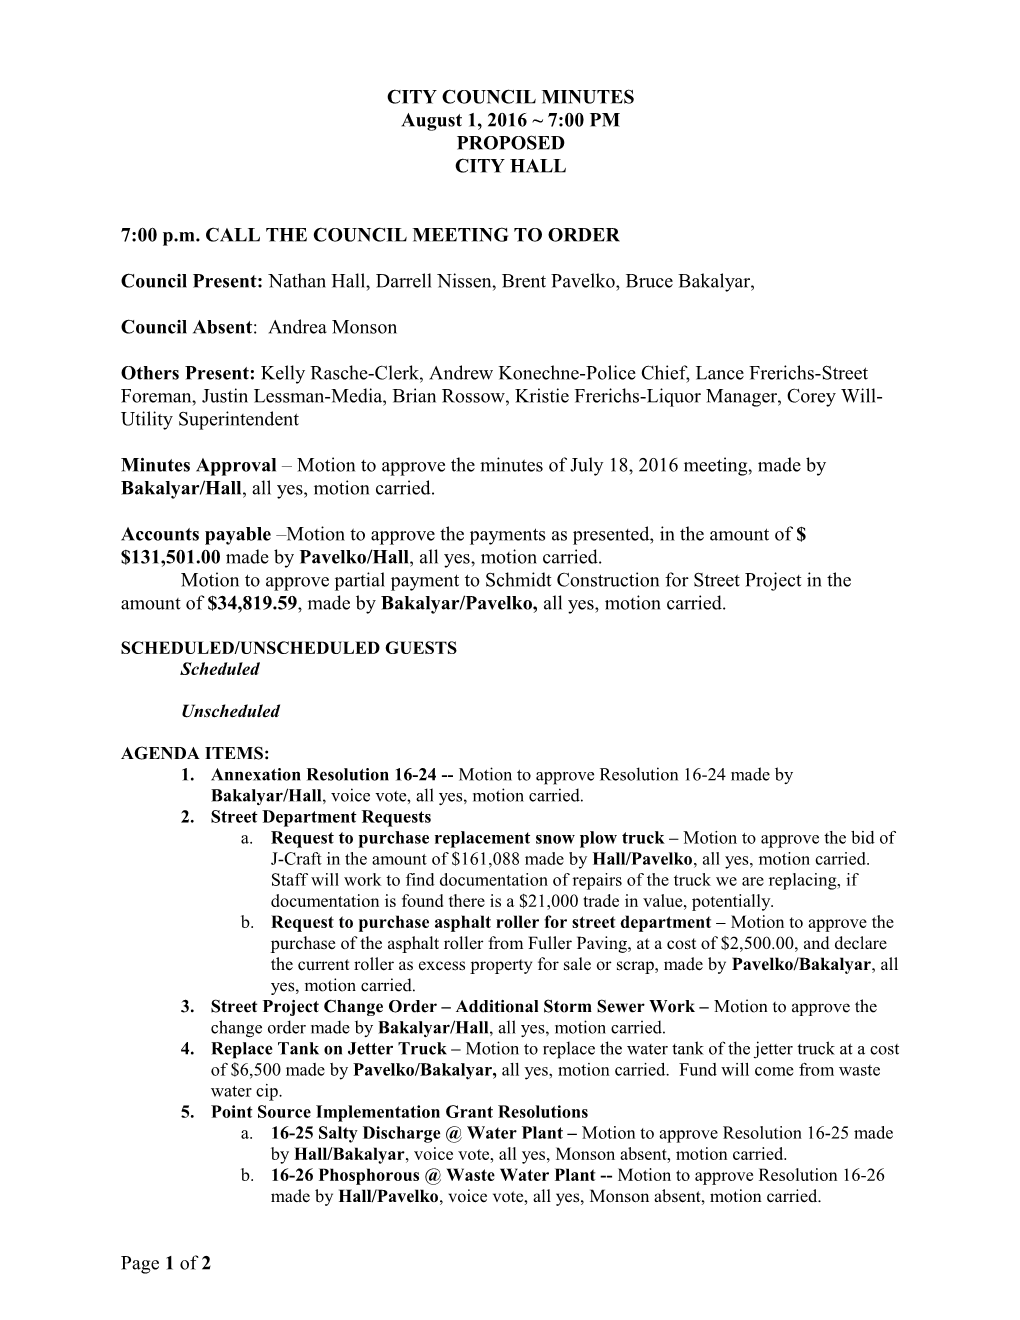 City Council Agenda s6